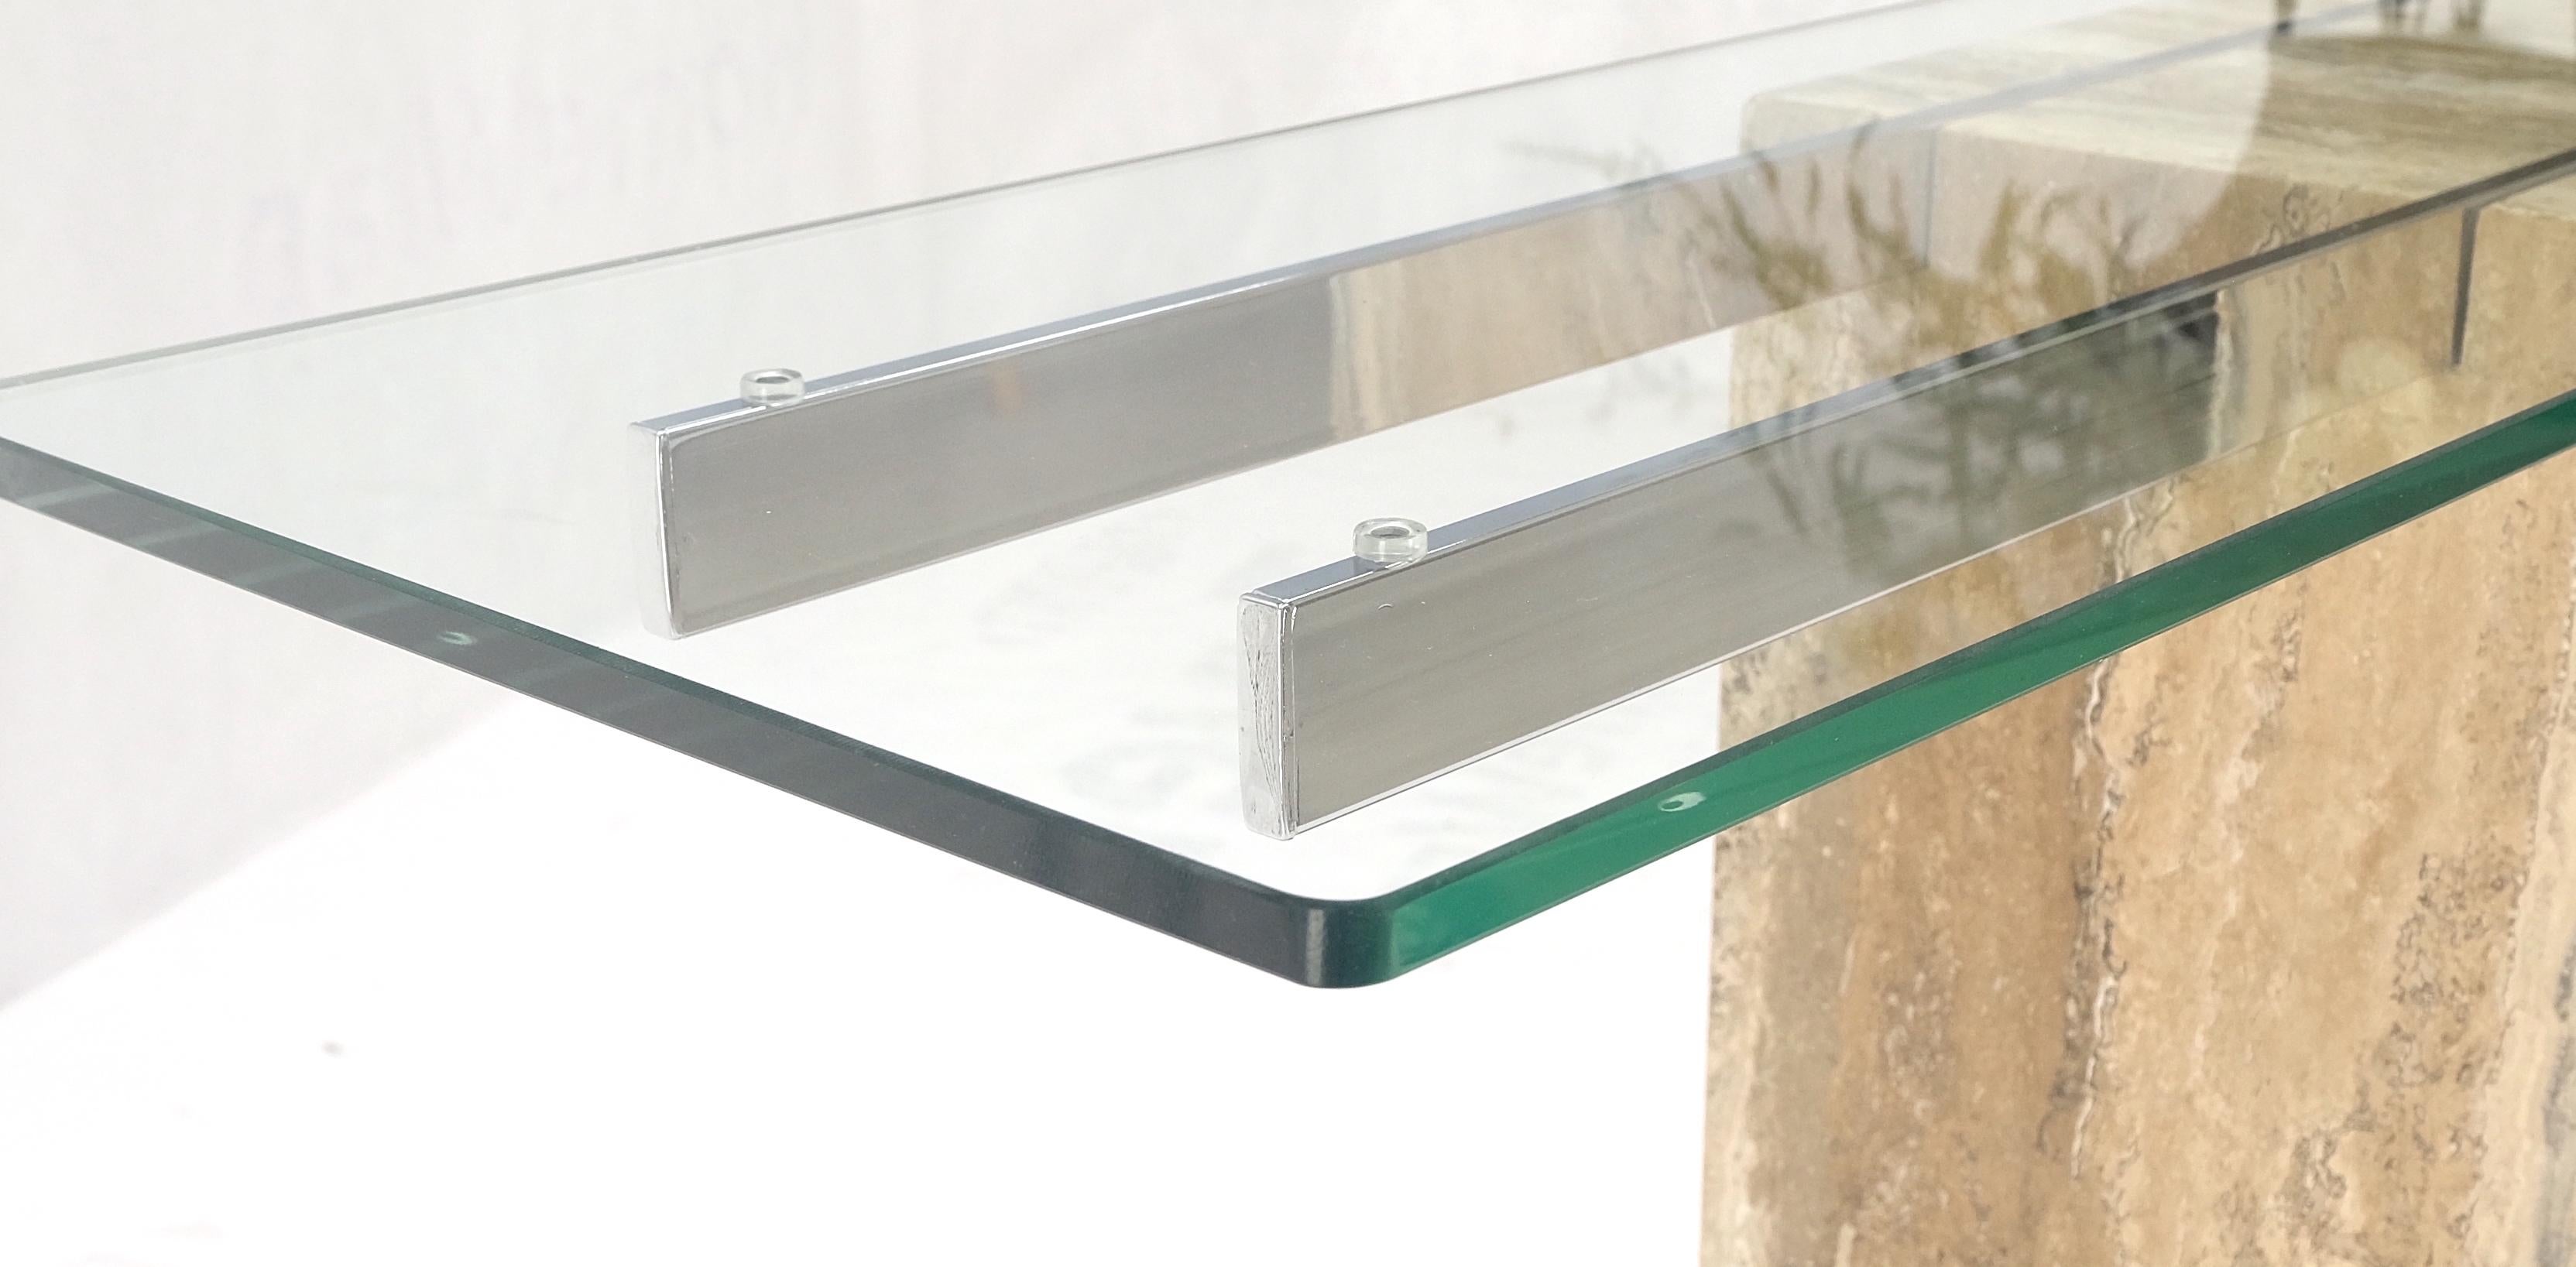 Single Travertine  Pedestal Glass Top Italian Modern Sofa Console Table MINT!
glass thickness: 0.5